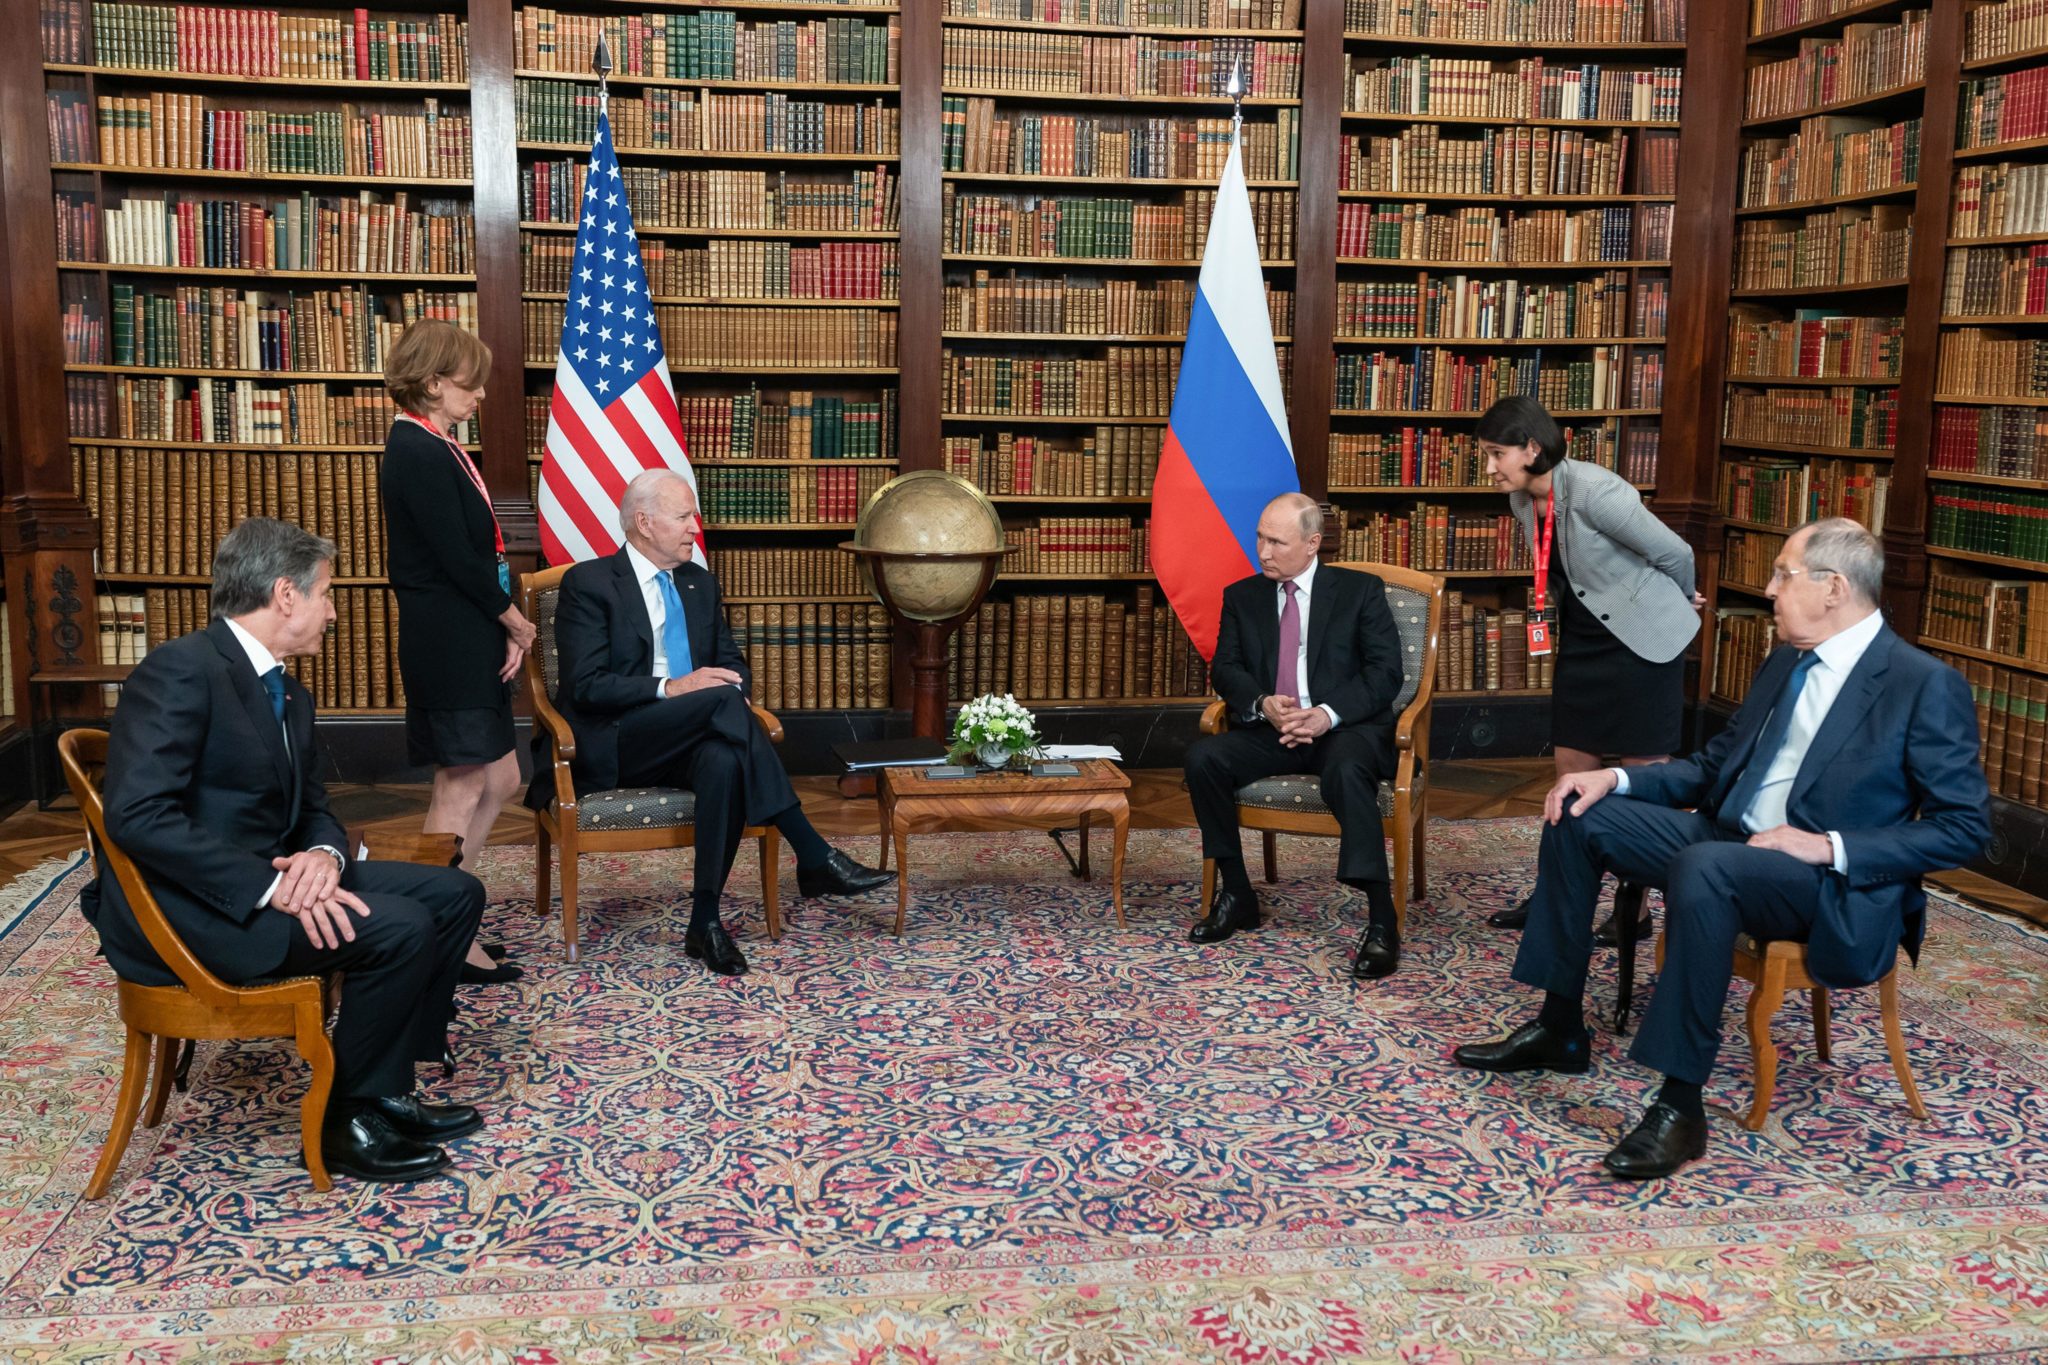 US President Joe Biden and Russian President Vladimir Putin participate in a tete-a-tete during a US-Russia Summit in Geneva. Image: Geopix / Alamy Stock Photo